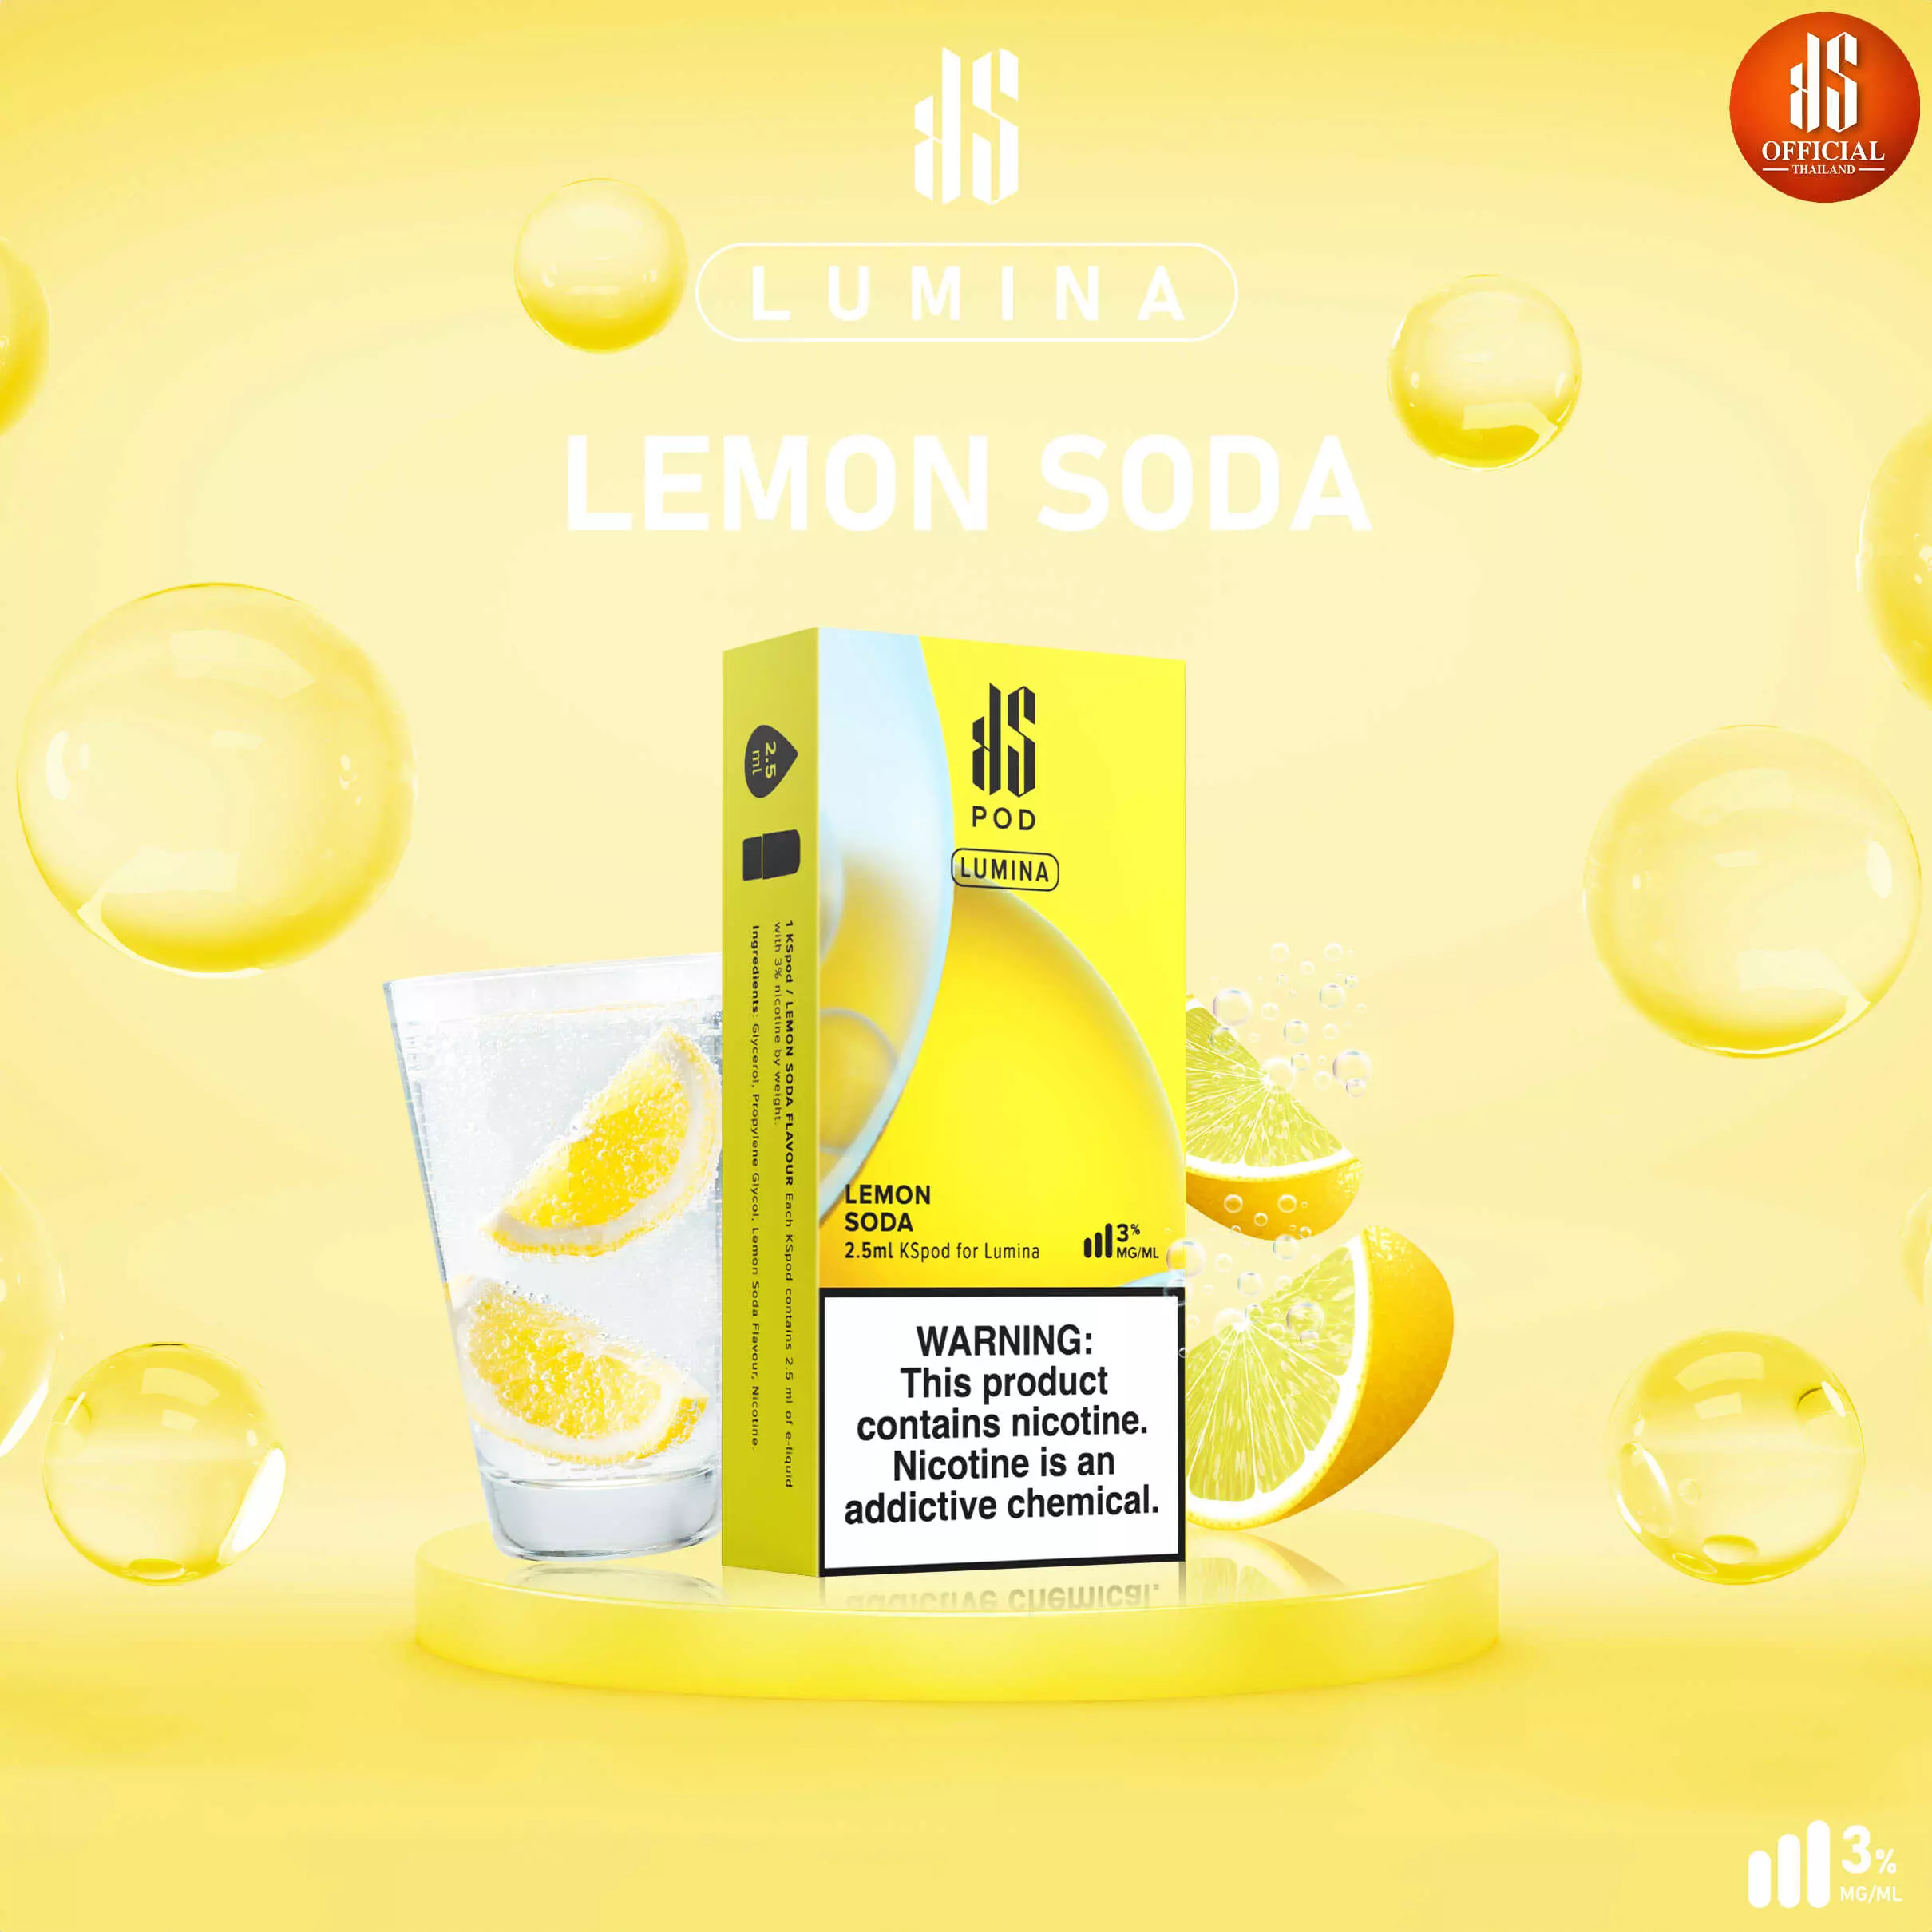 KS Lumina Lemon Soda - KS Official thailand